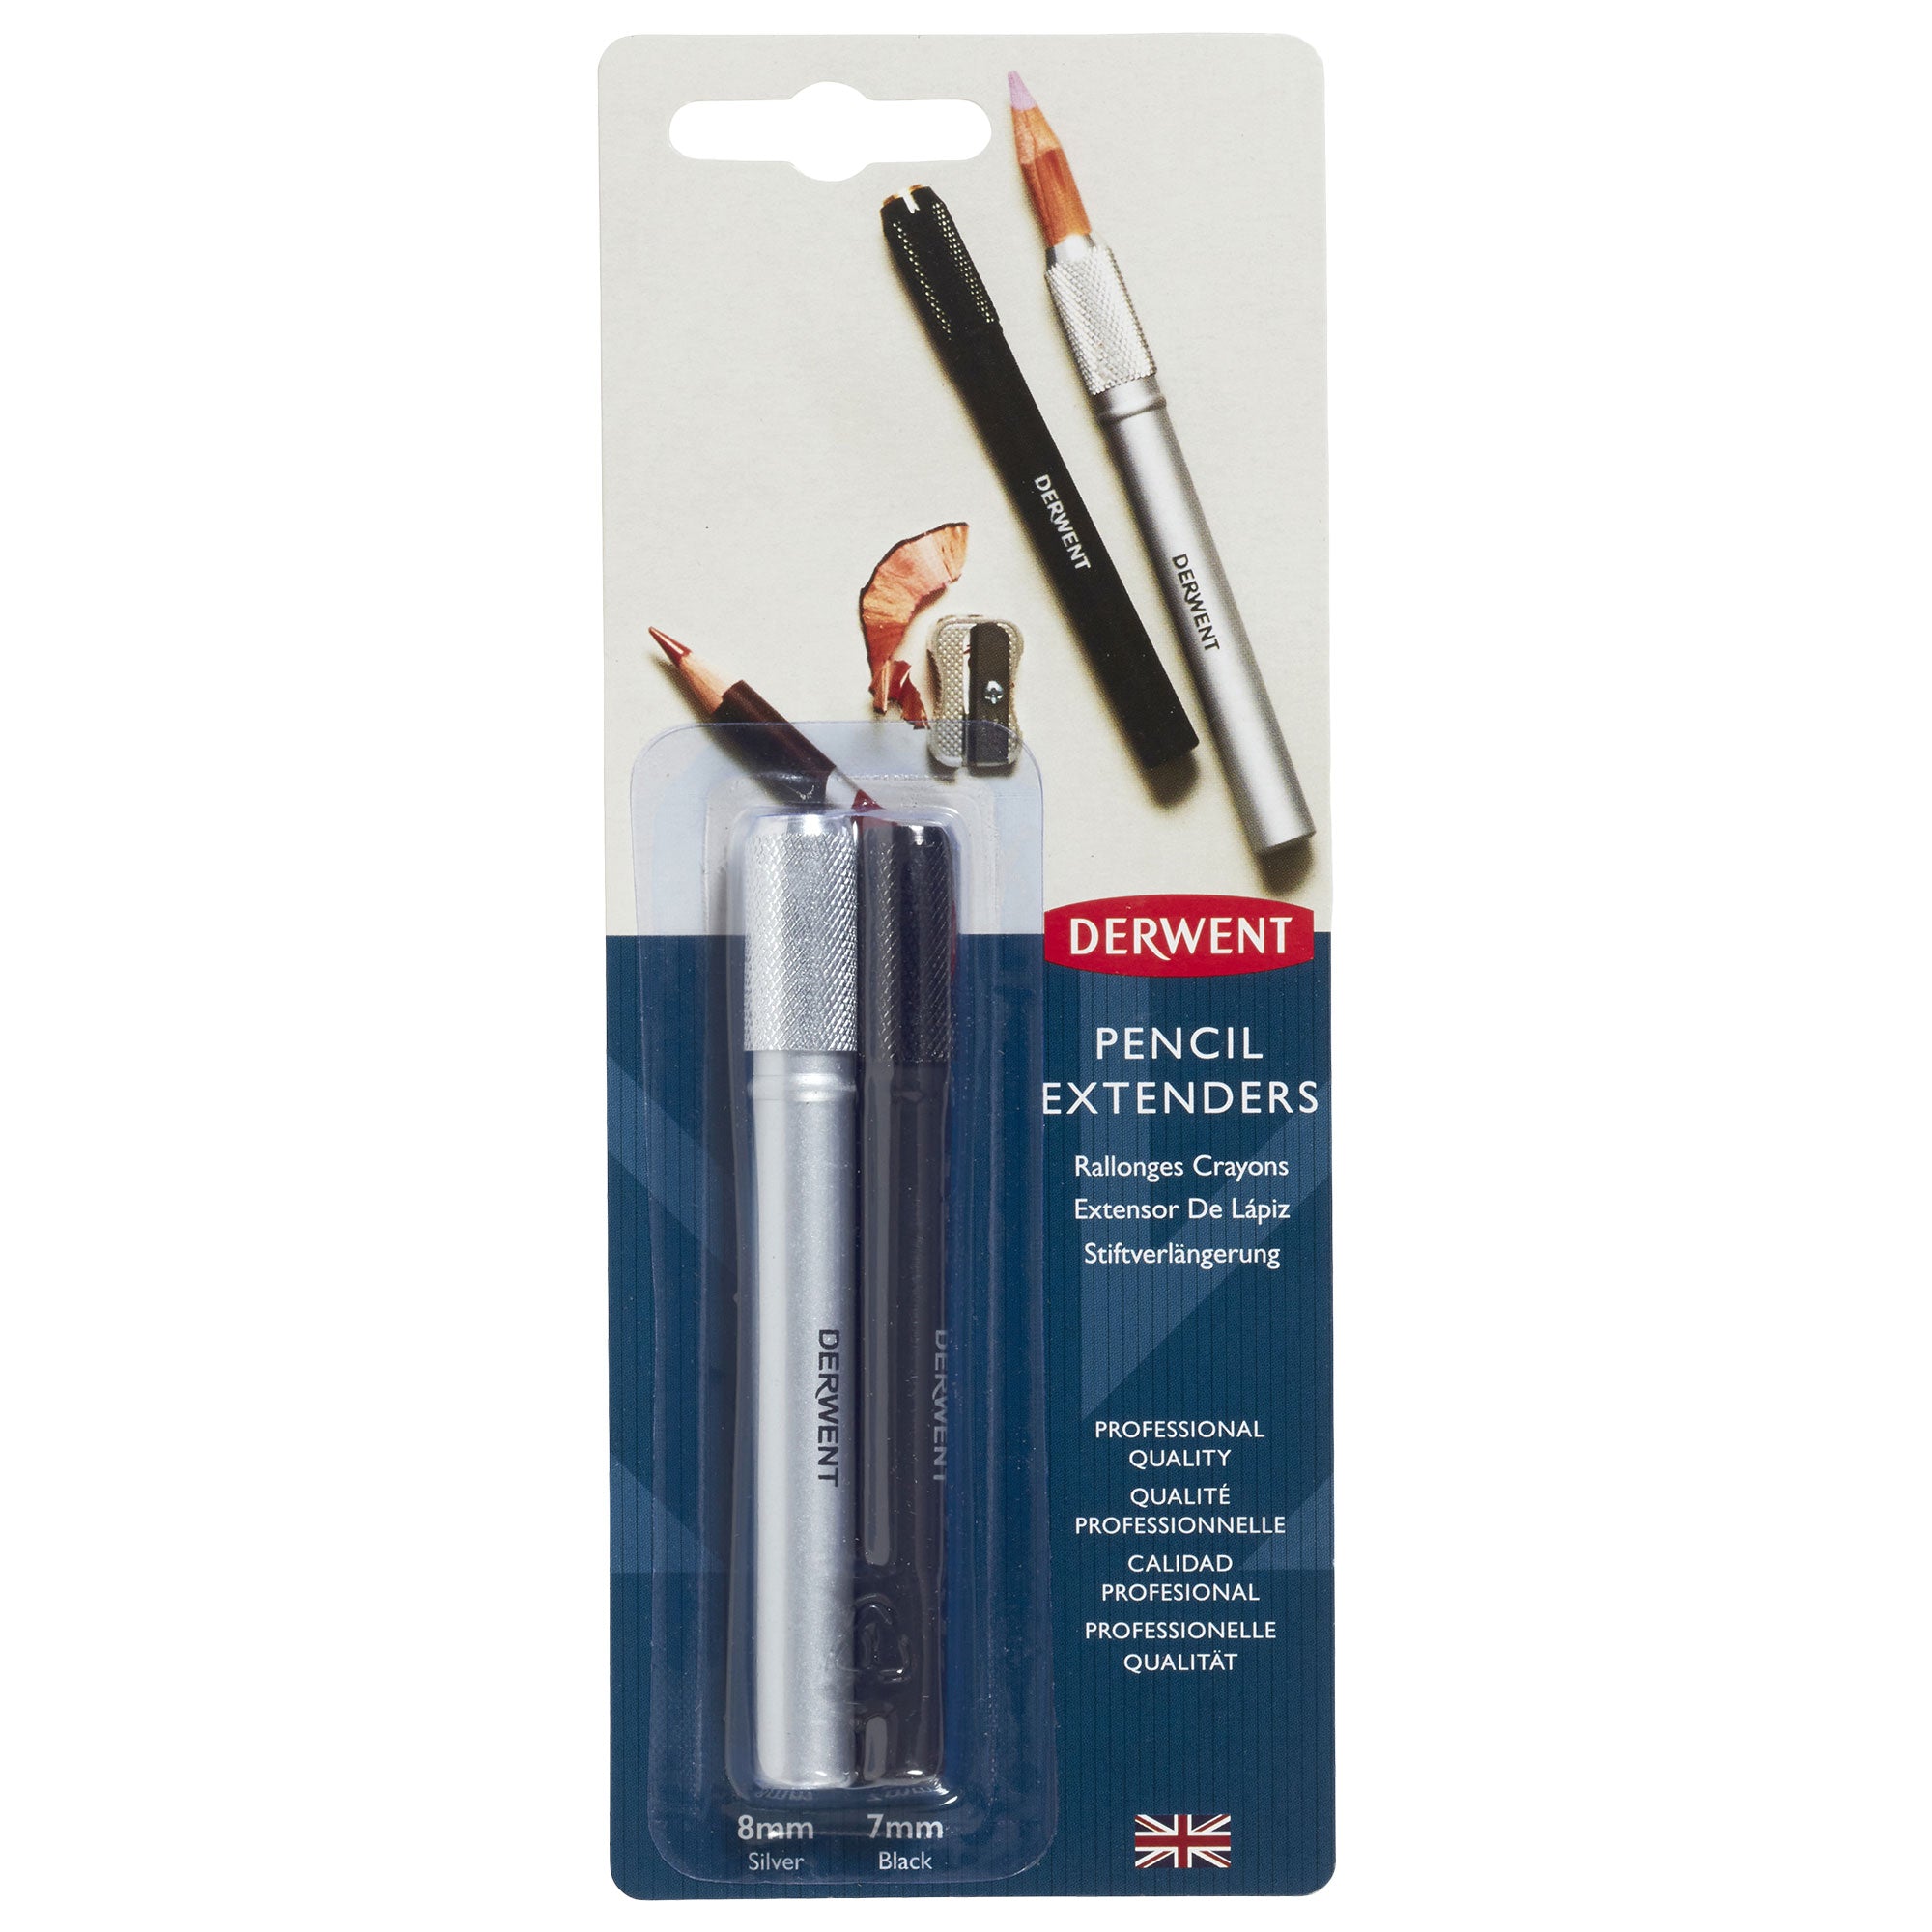 Derwent Pencil Extenders Box